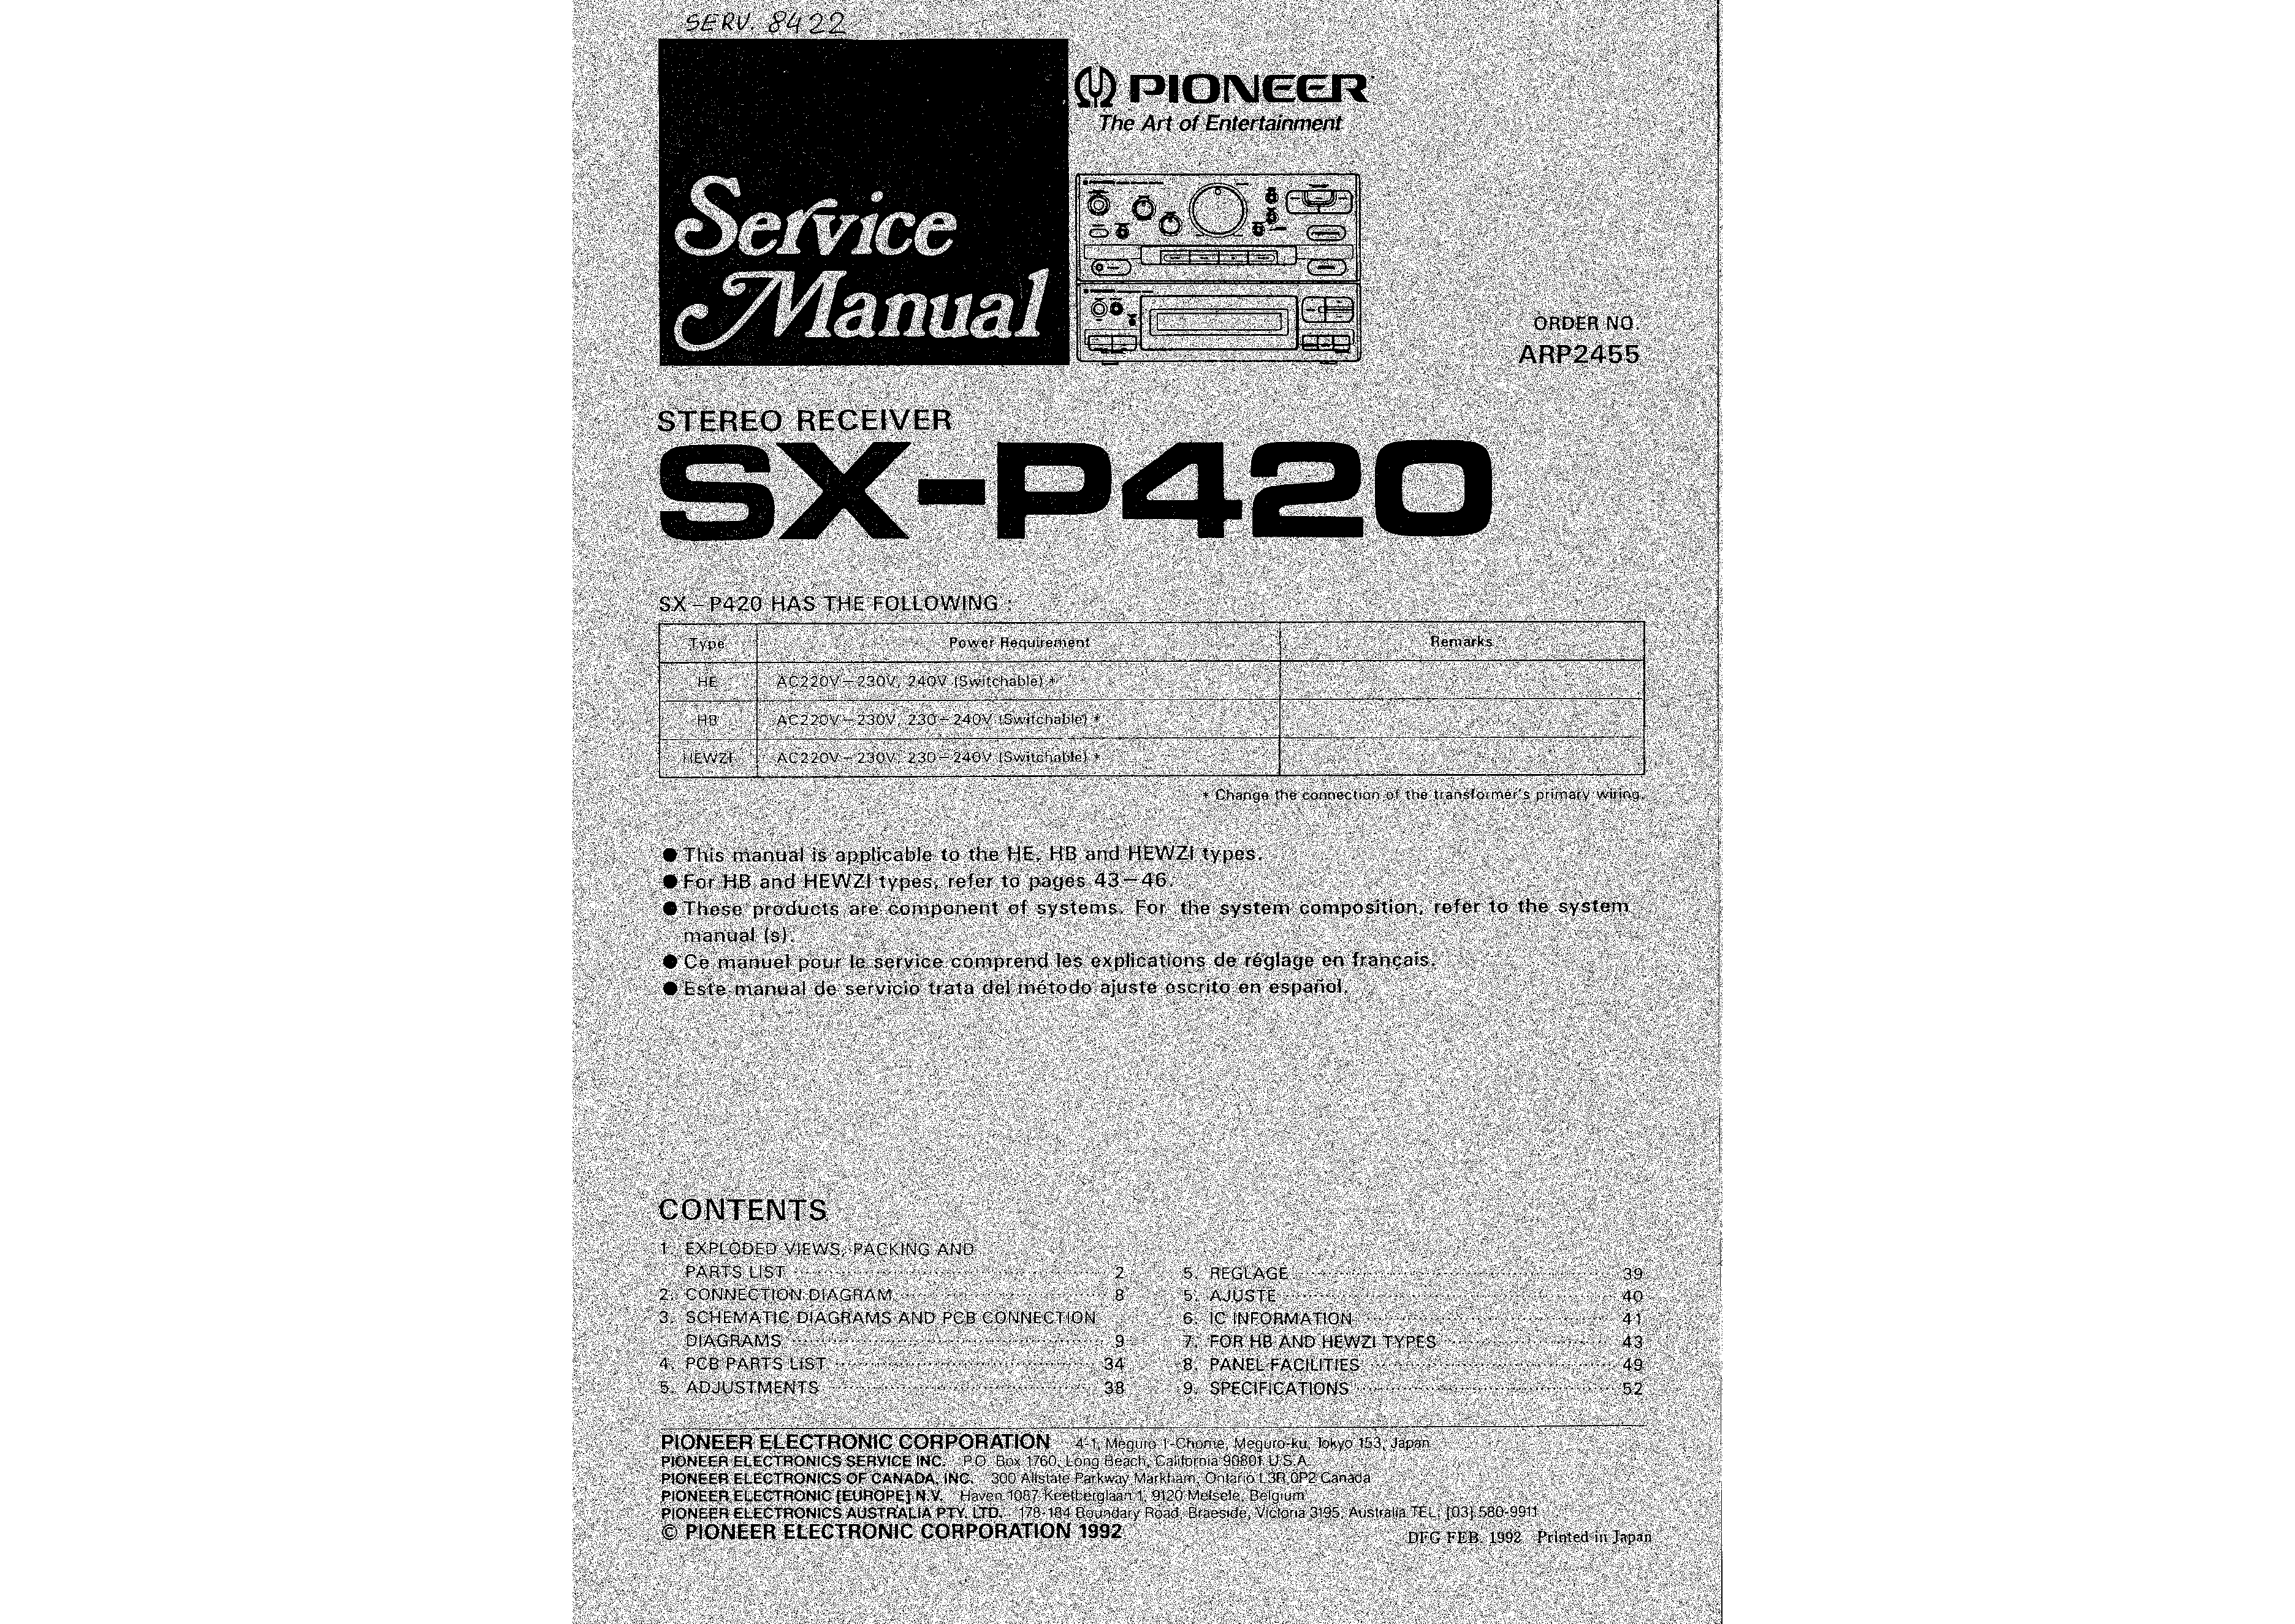 SX-229 Service Manual-Anleitung für Pioneer SX-339 